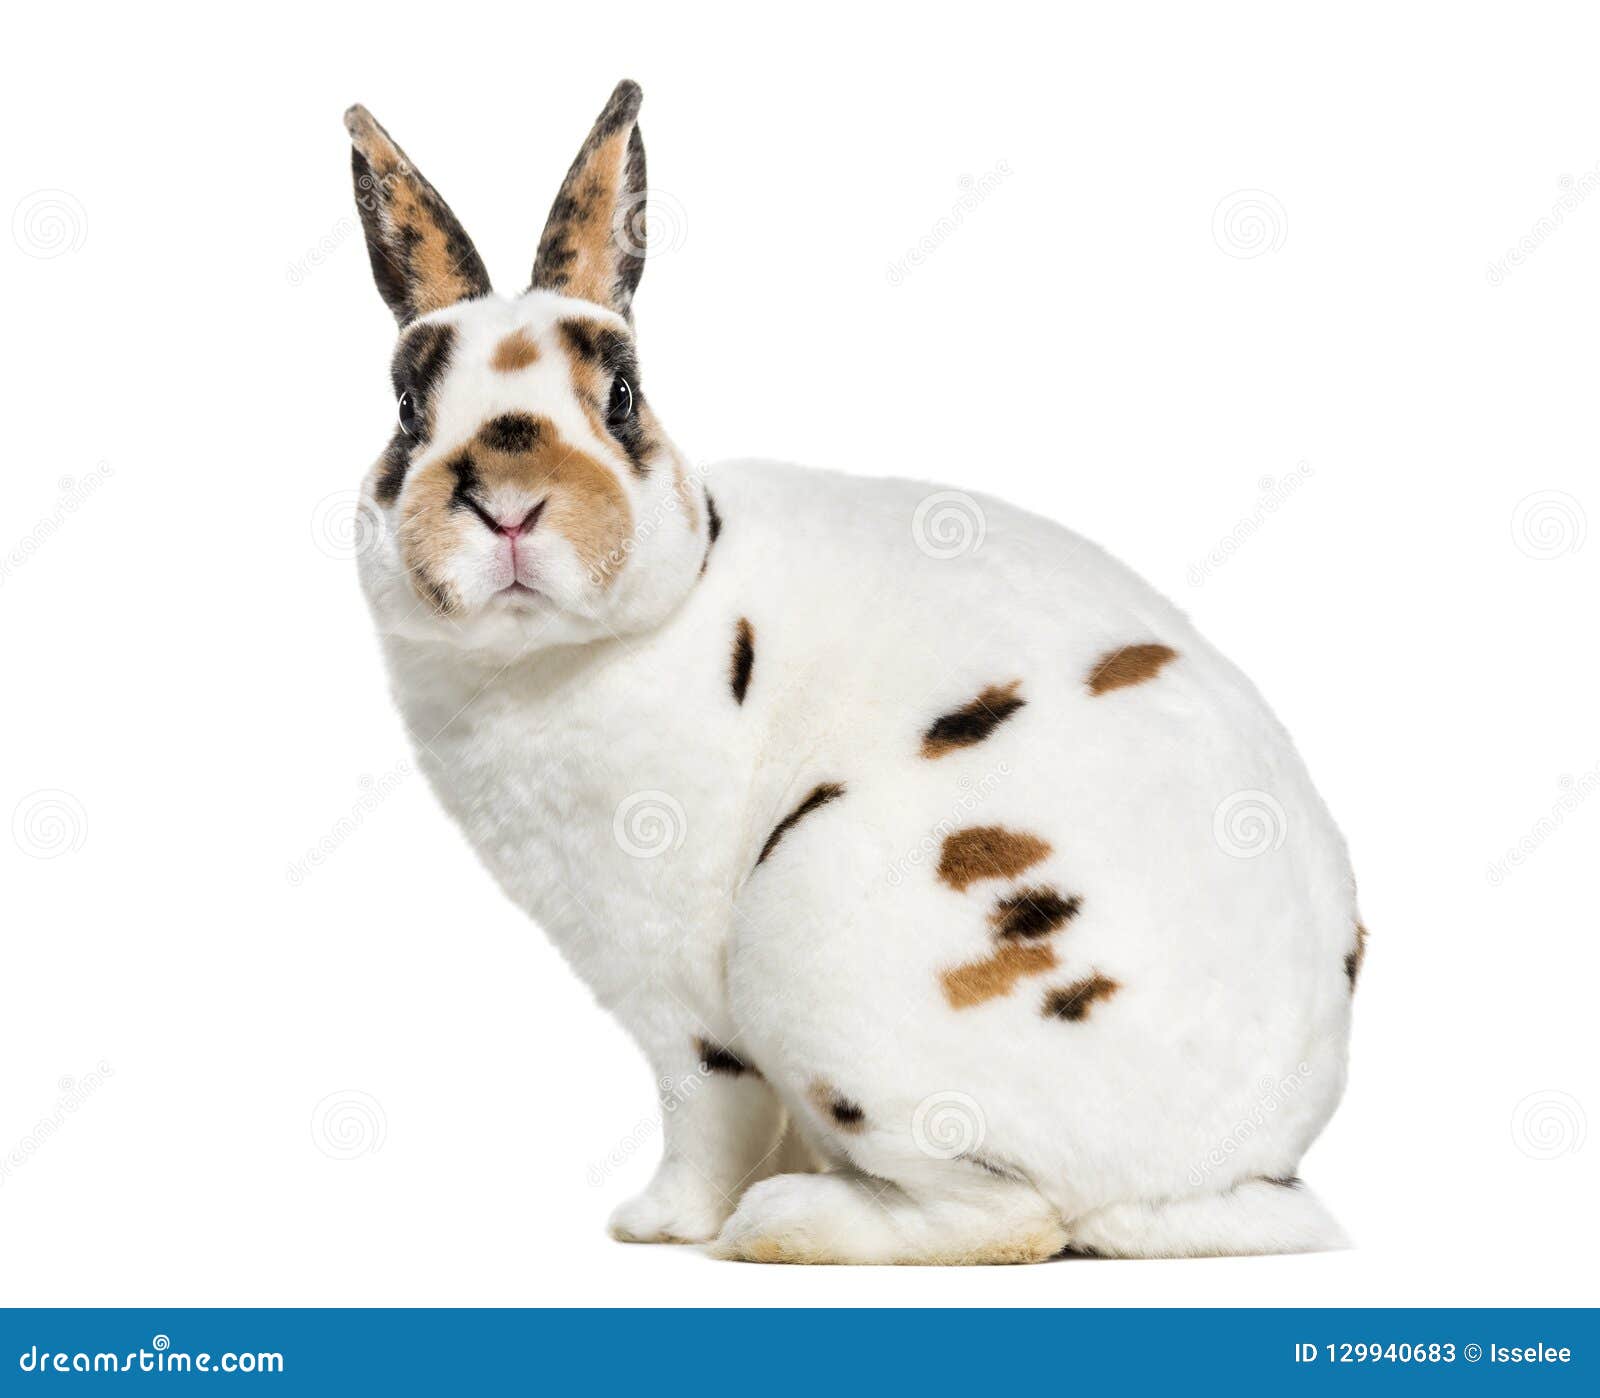 Rex Dalmatian Rabbit, Sitting Against White Background